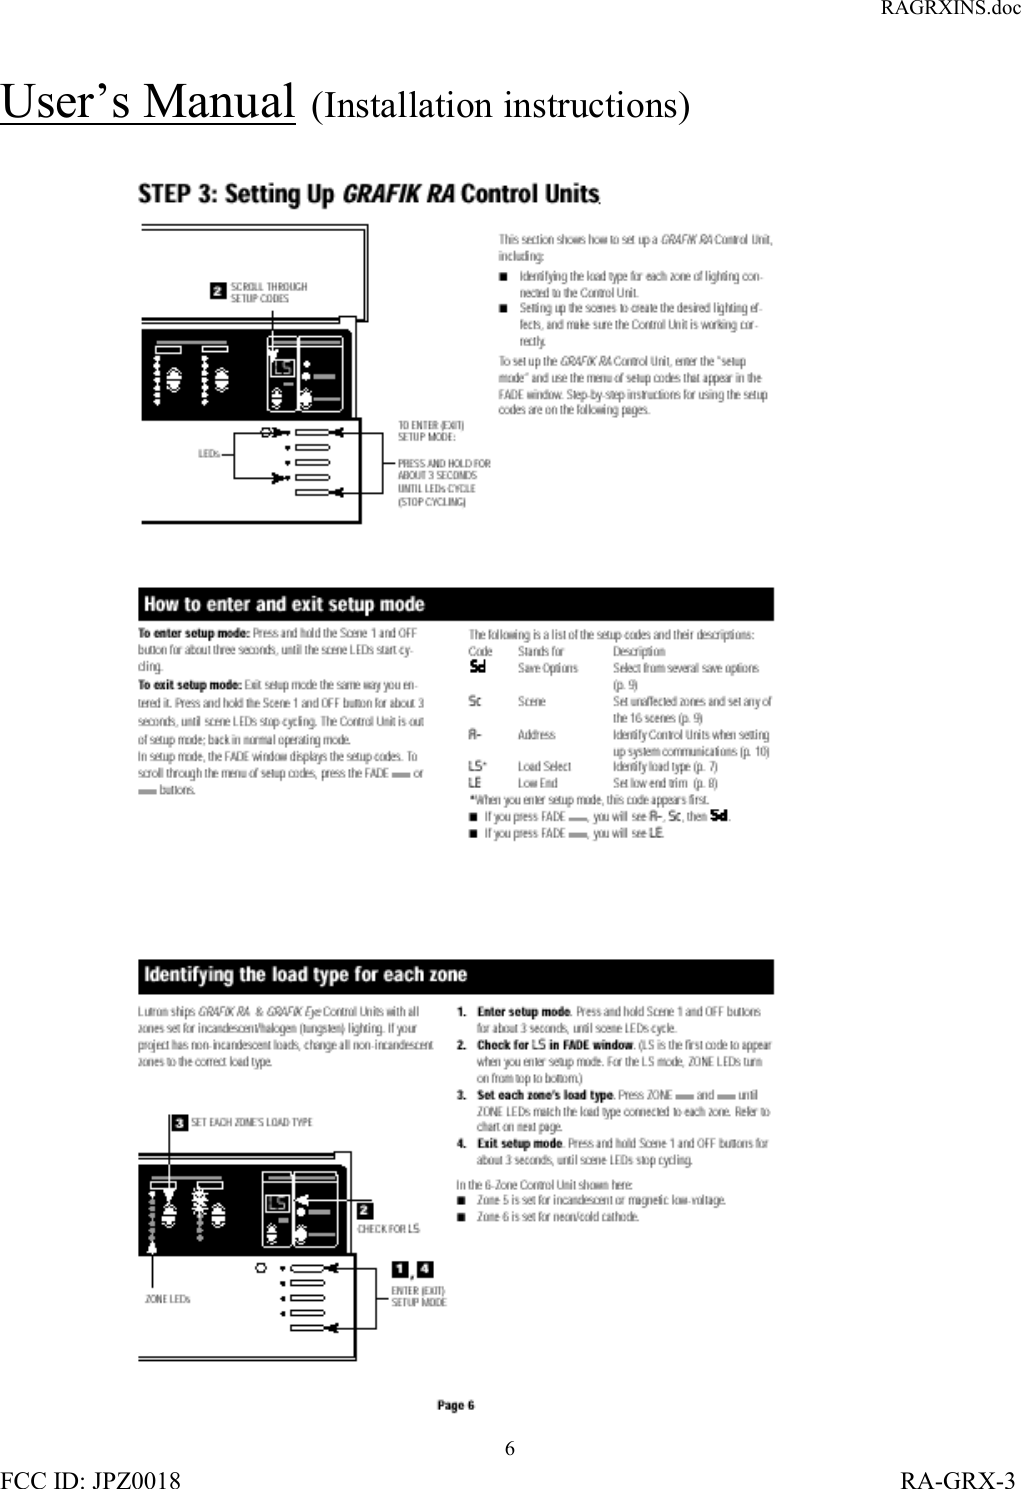 RAGRXINS.docFCC ID: JPZ0018                                                                                                                   RA-GRX-36User’s Manual  (Installation instructions)